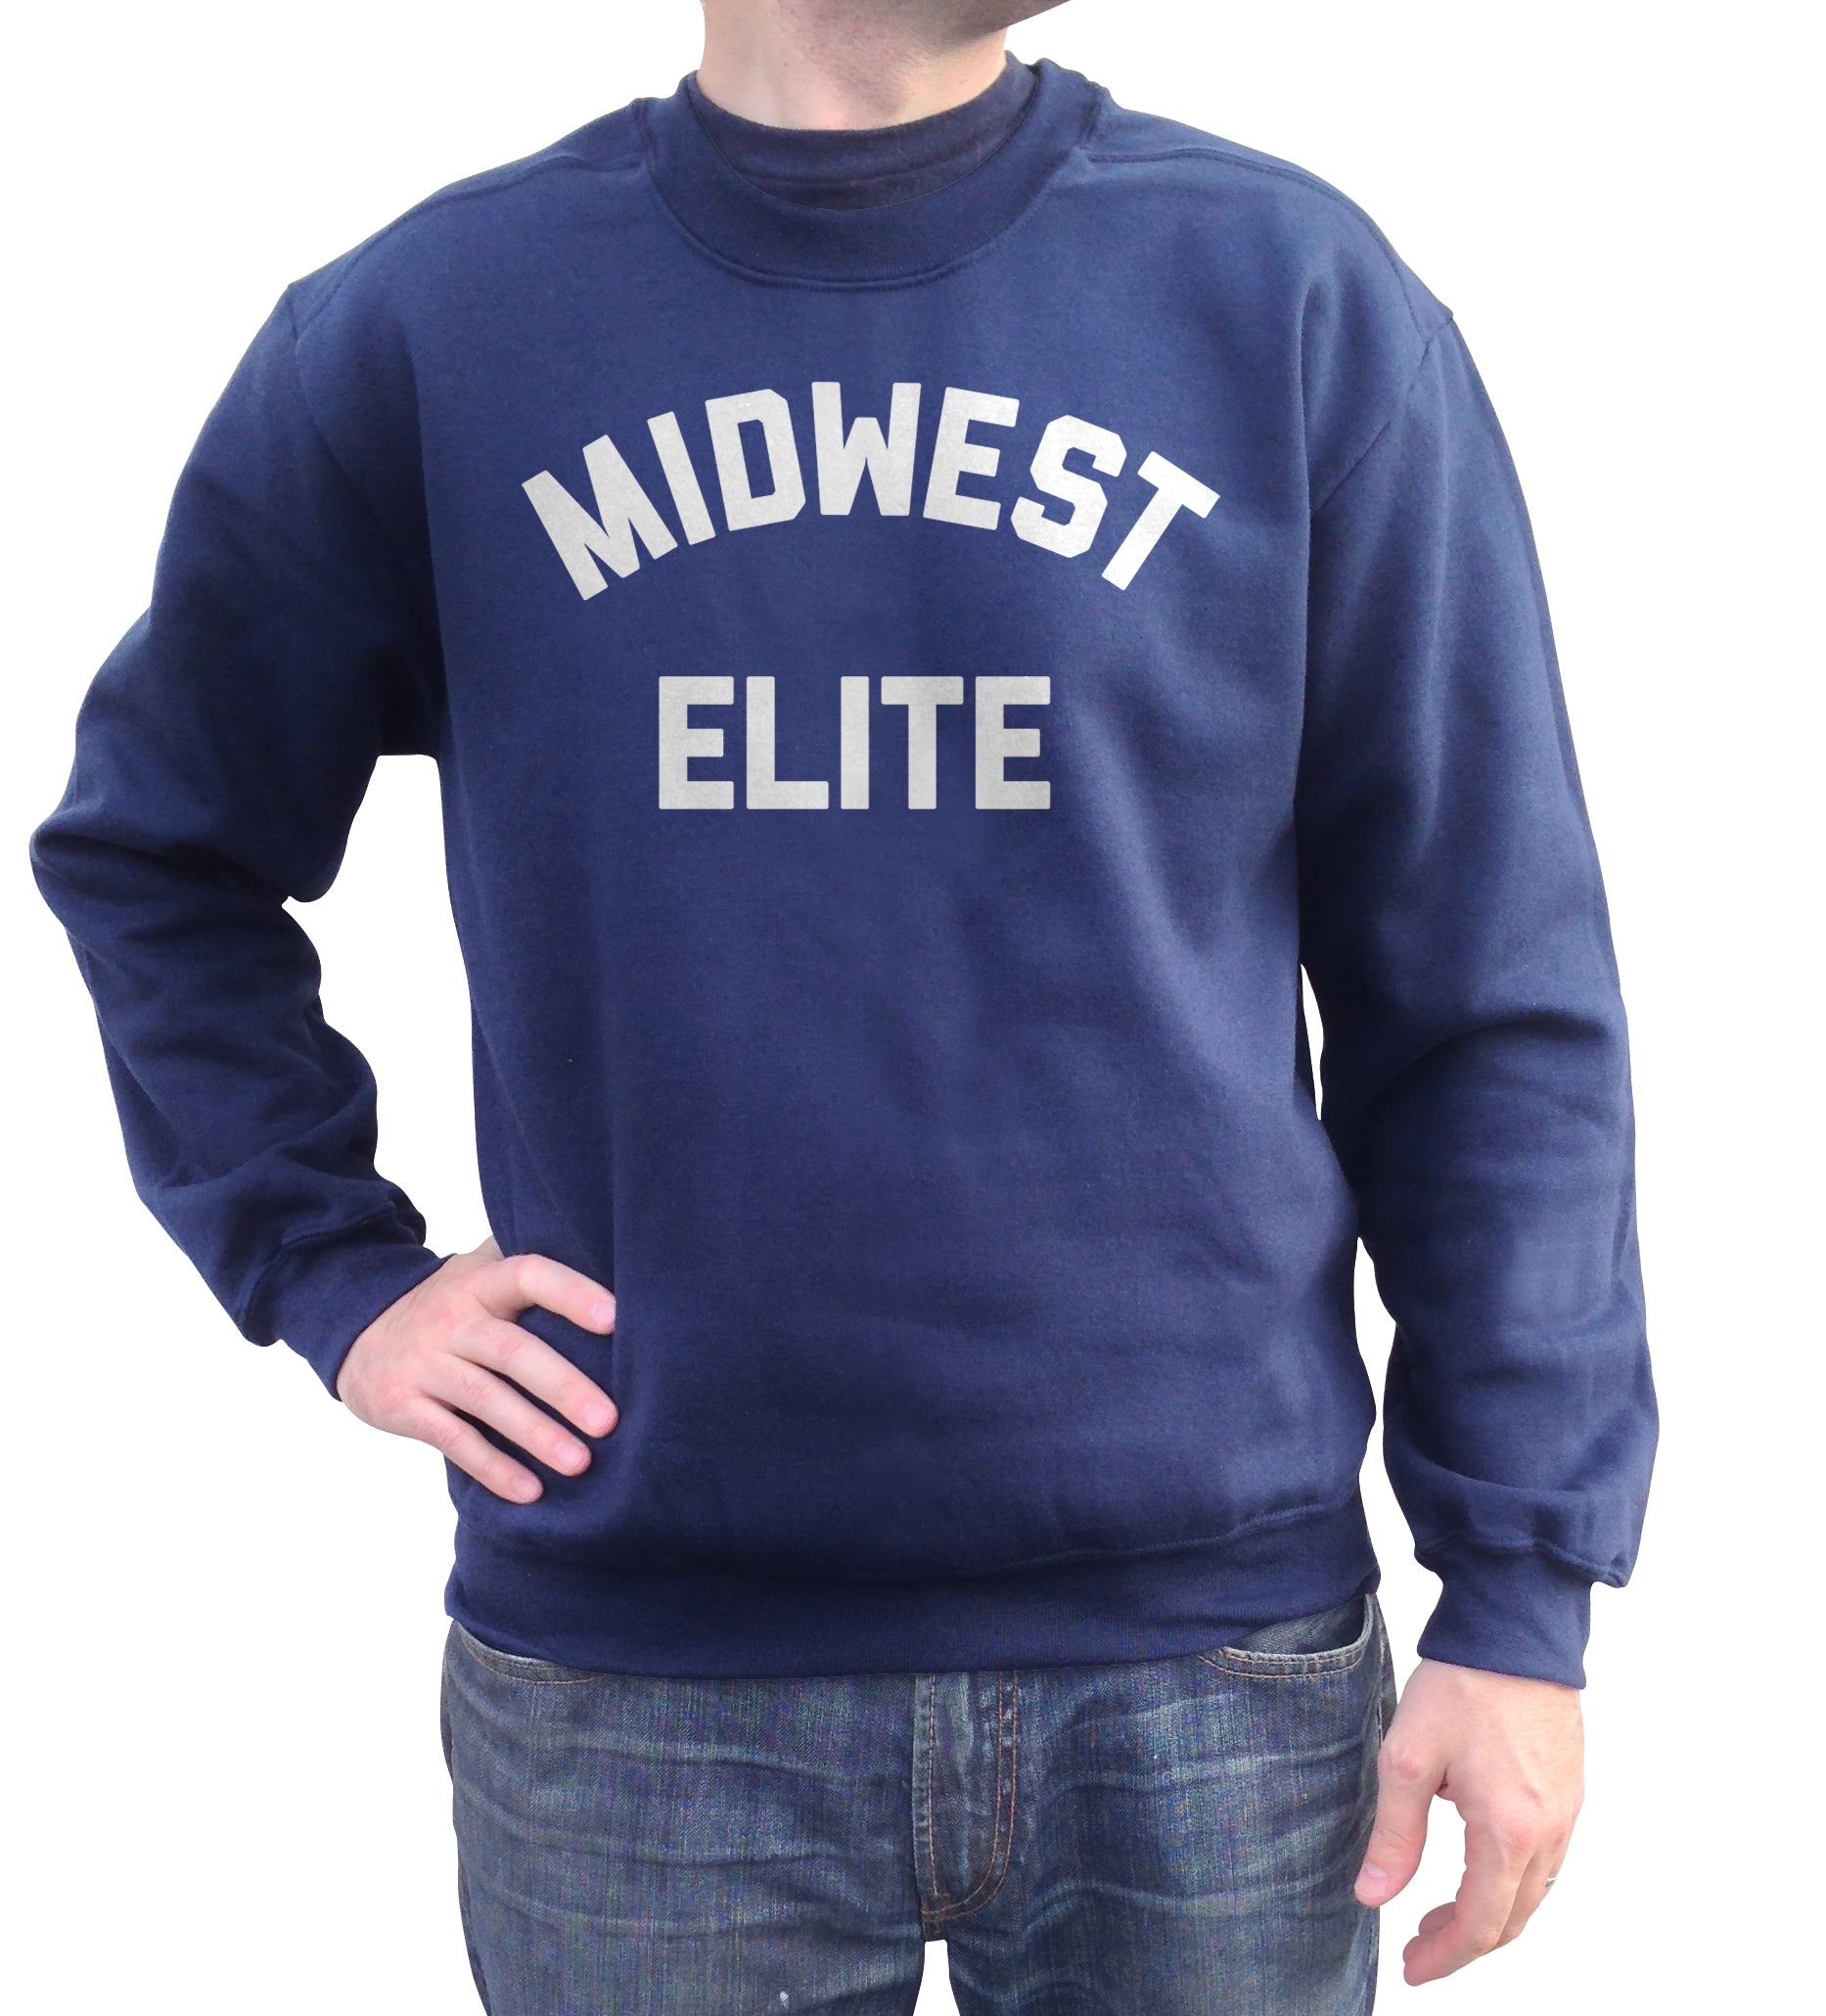 Unisex Midwest Elite Sweatshirt